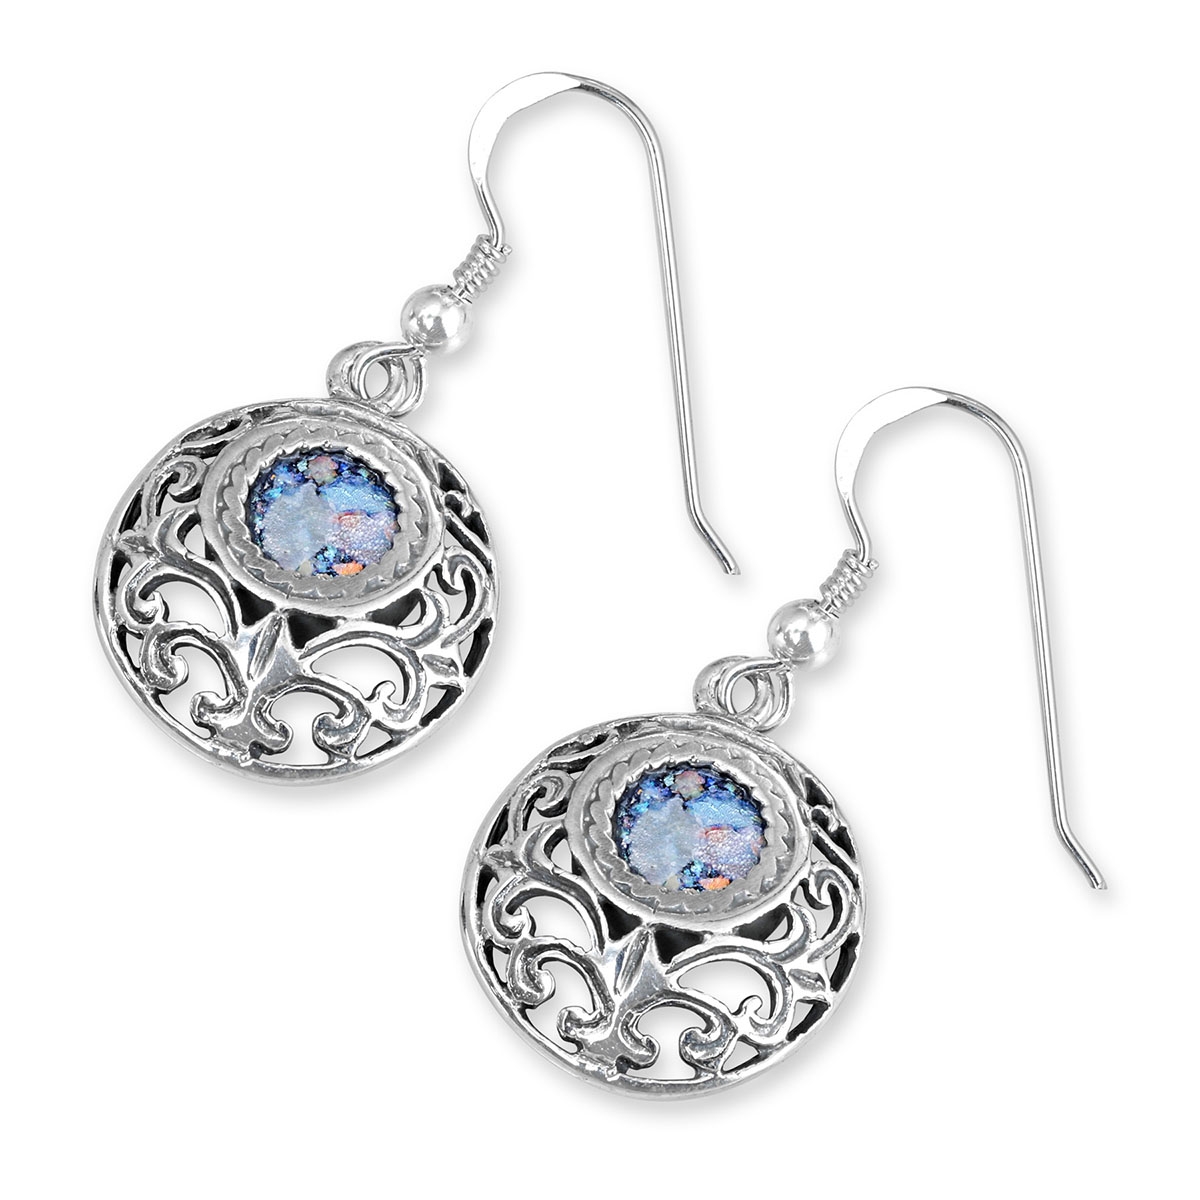 Rafael Jewelry Sterling Silver and Roman Glass Foliate Filigree Dome Earrings - 2